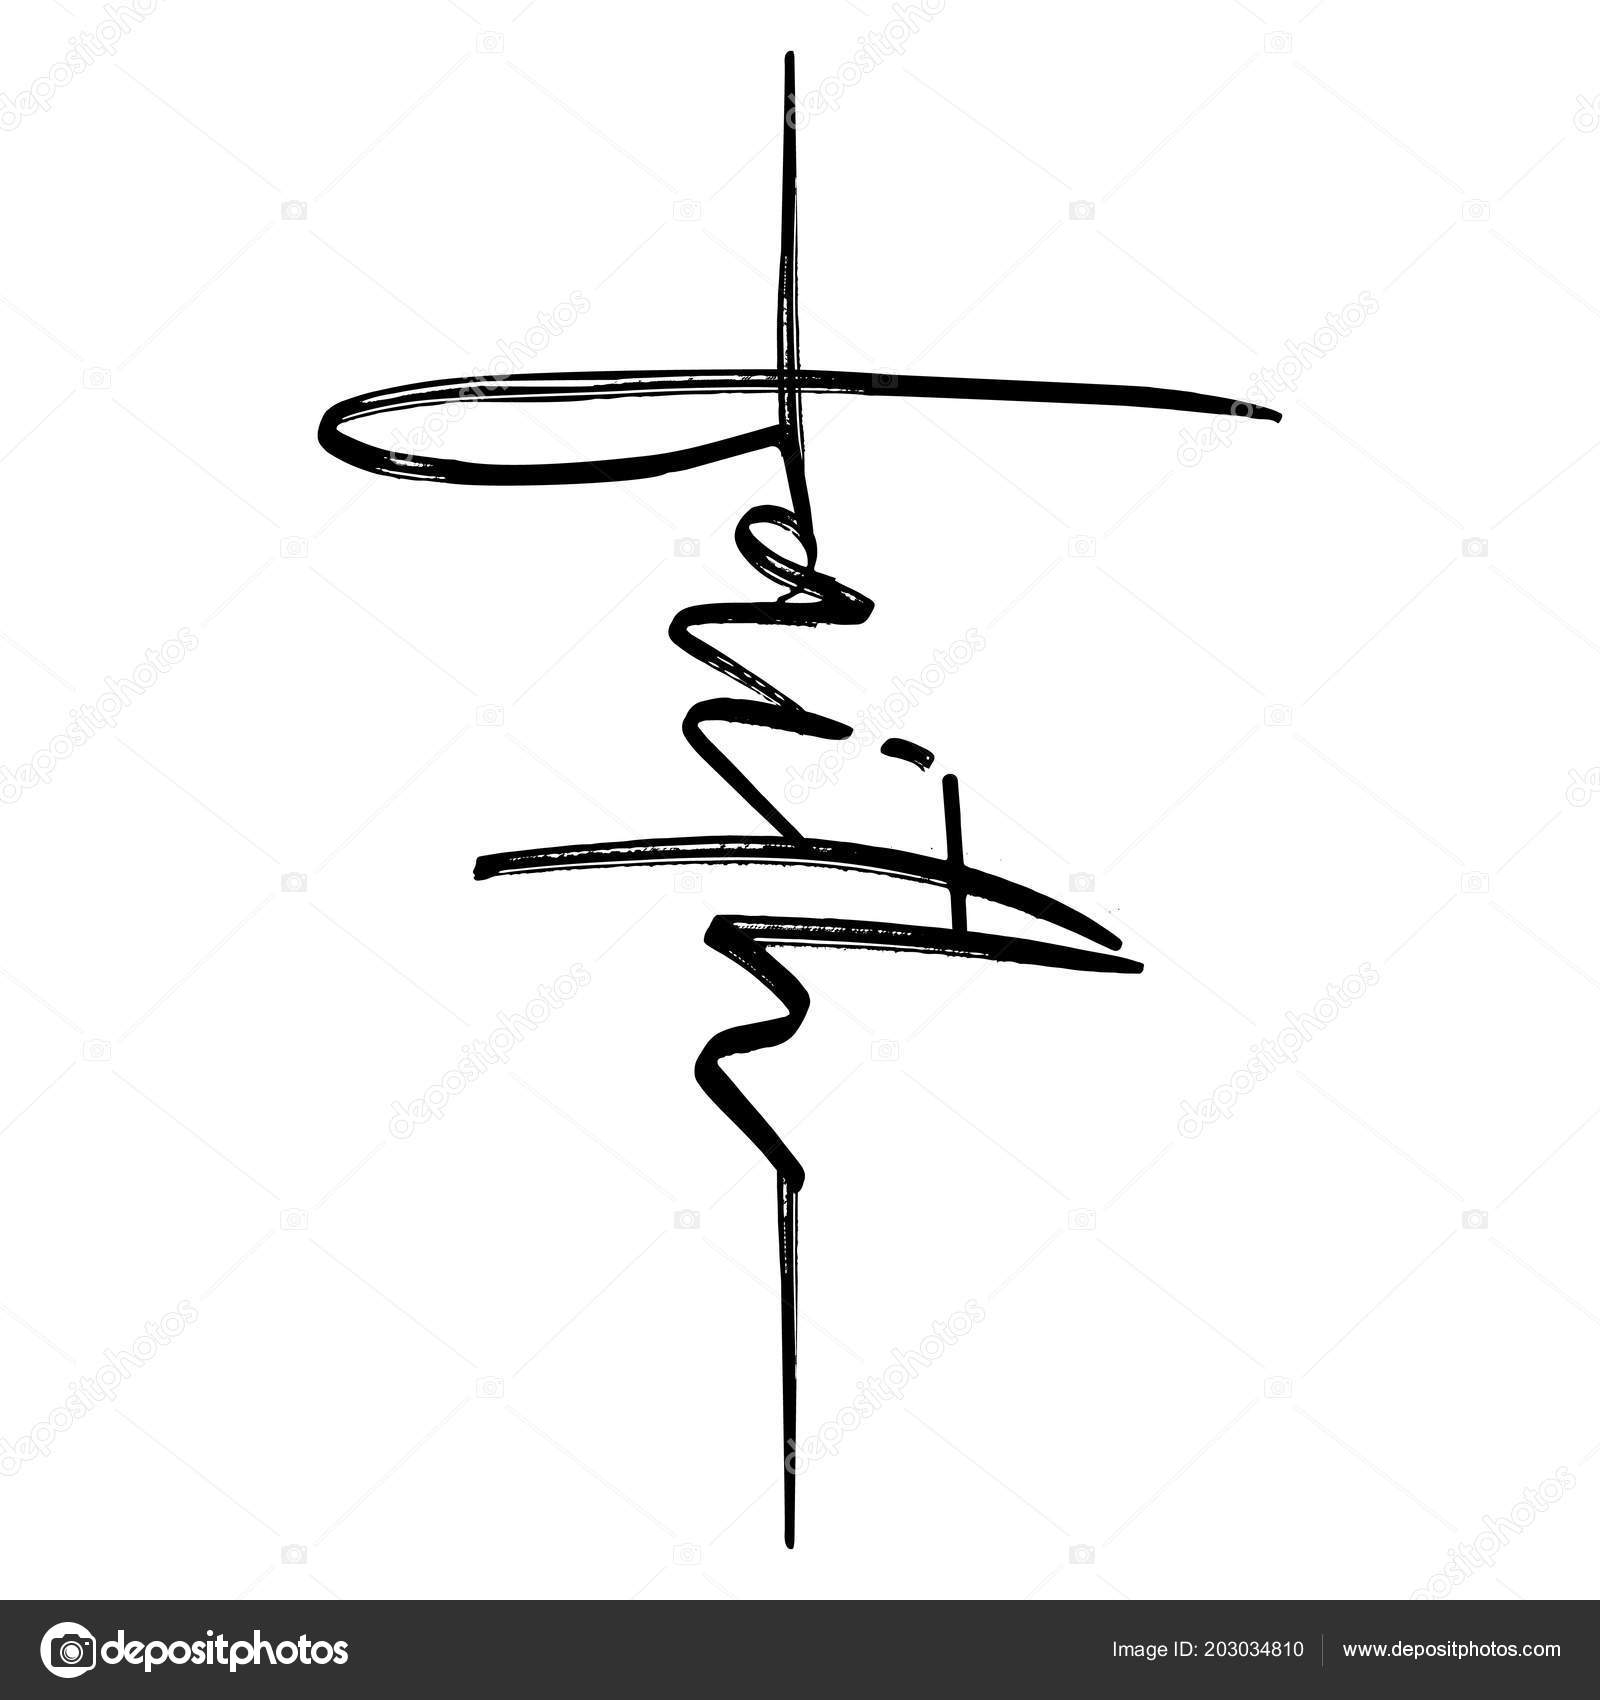 https://st4.depositphotos.com/18064032/20303/v/1600/depositphotos_203034810-stock-illustration-faith-hand-written-vector-calligraphy.jpg